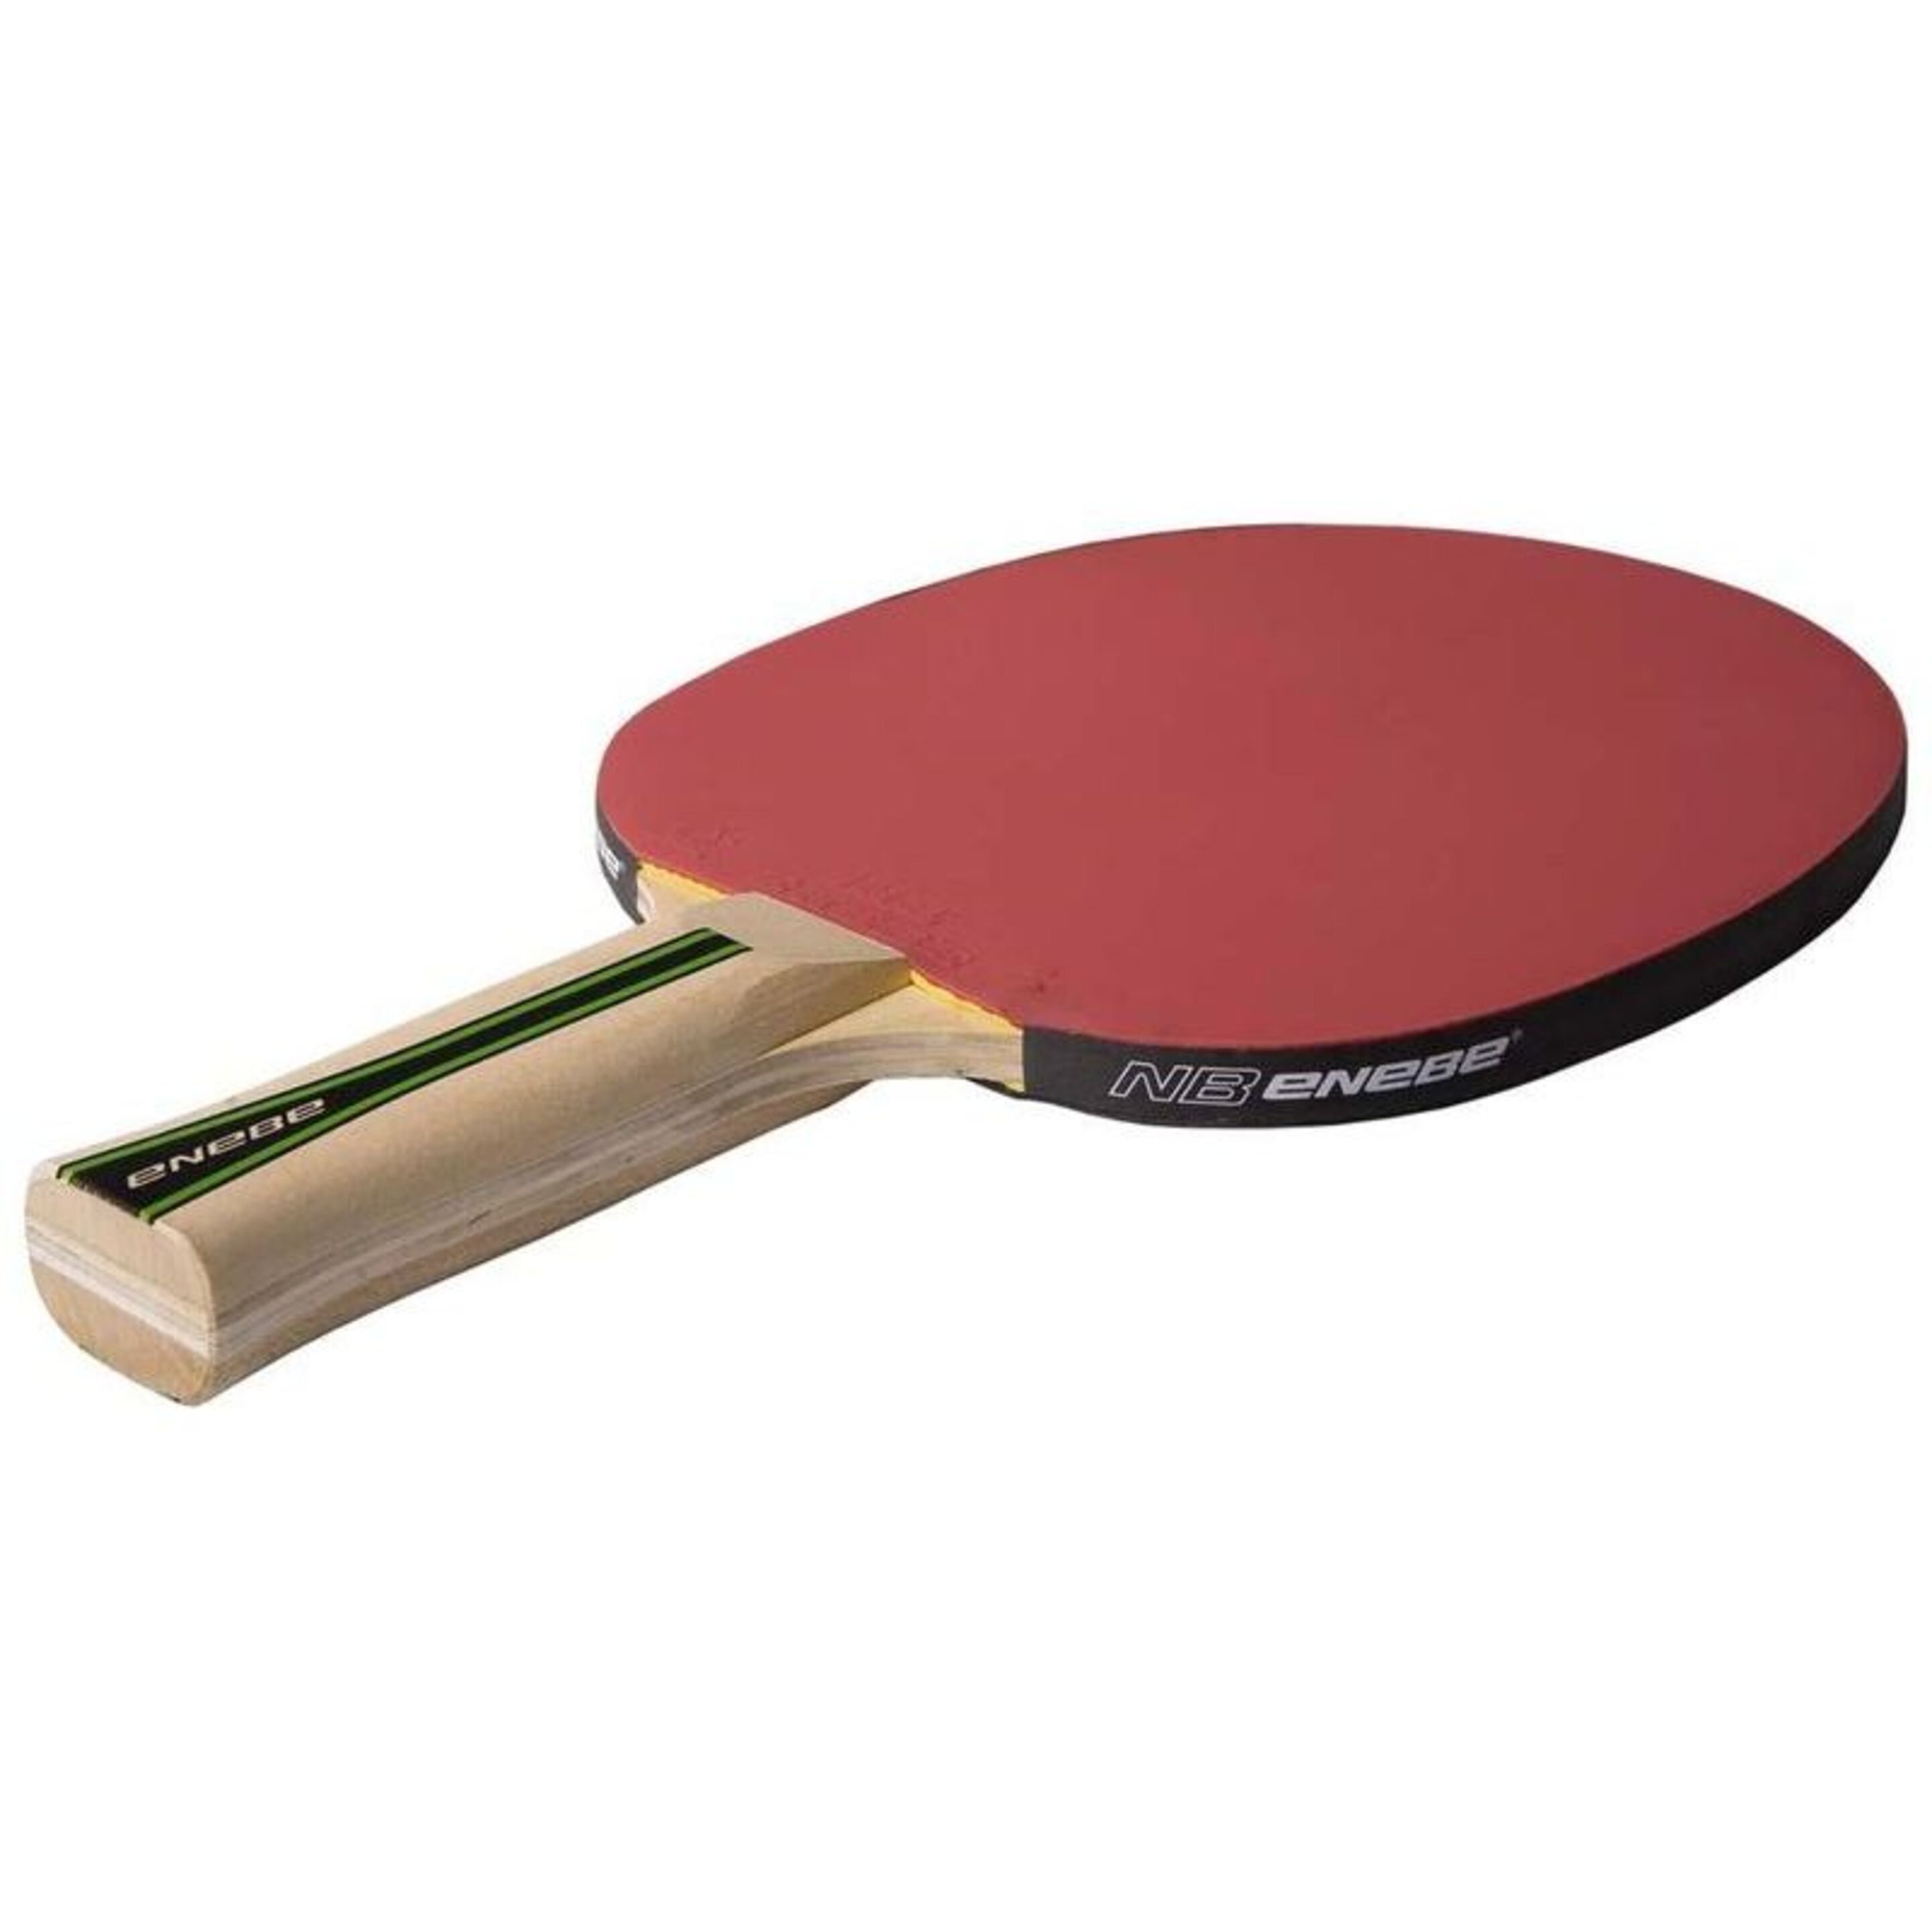 Pala Ping Pong Enebe Equipo 400 - Multicolor  MKP